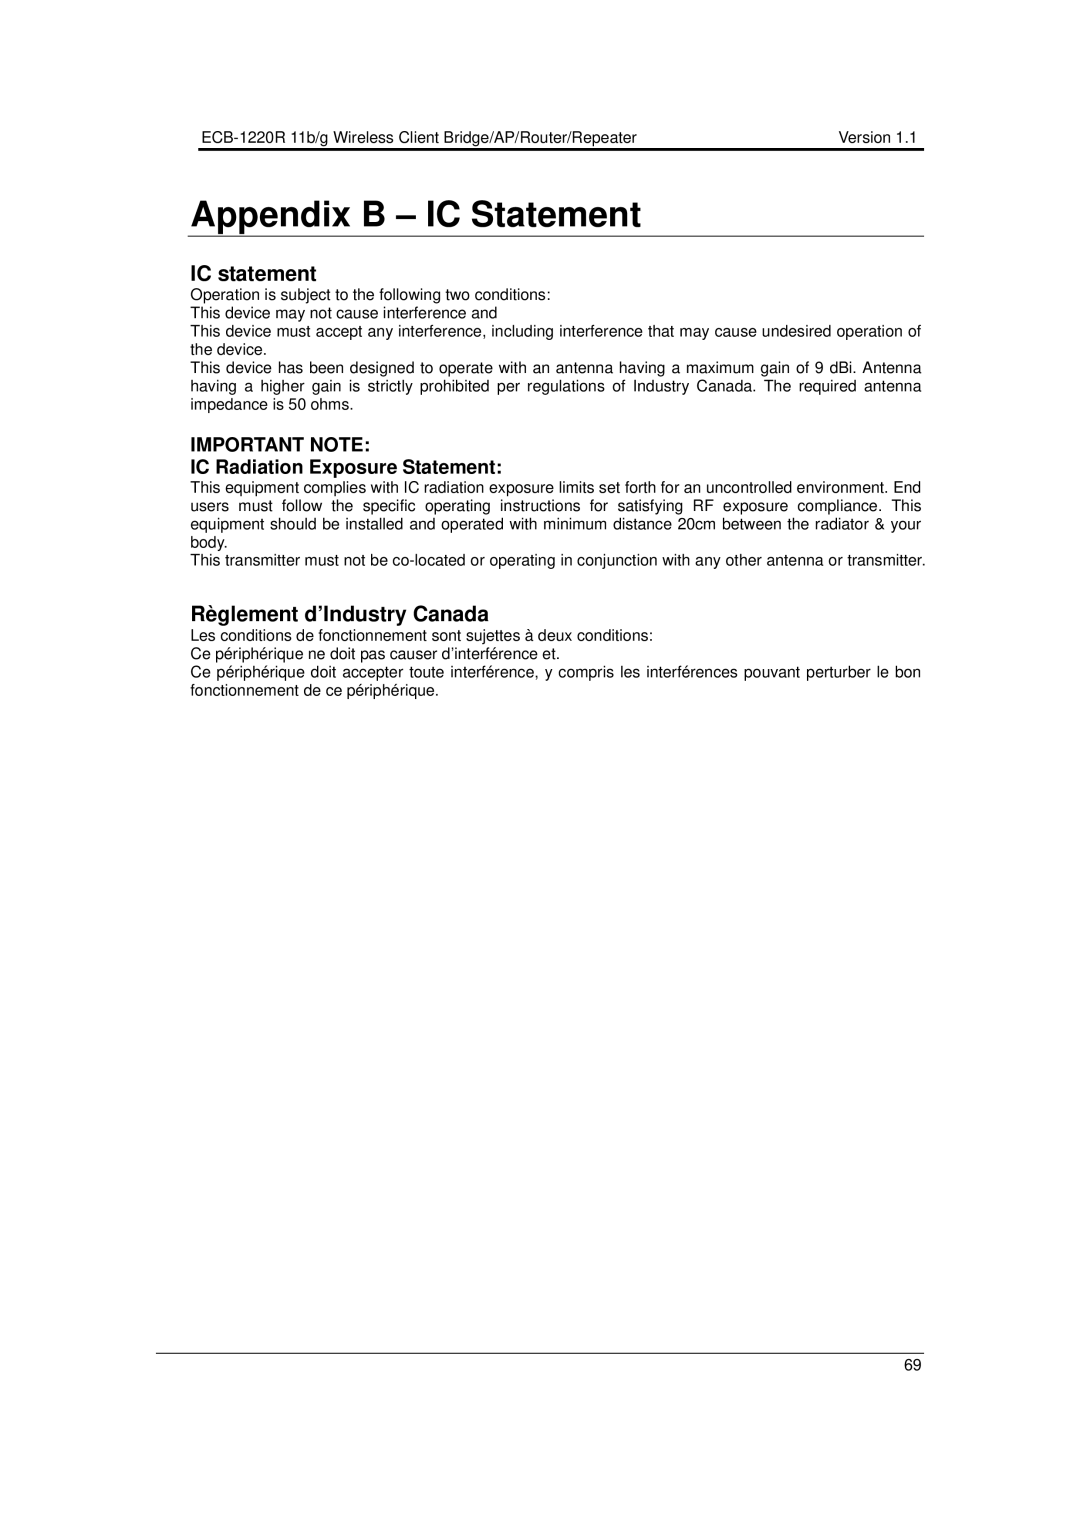 EnGenius Technologies ECB-1220R user manual Appendix B IC Statement, IC Radiation Exposure Statement 